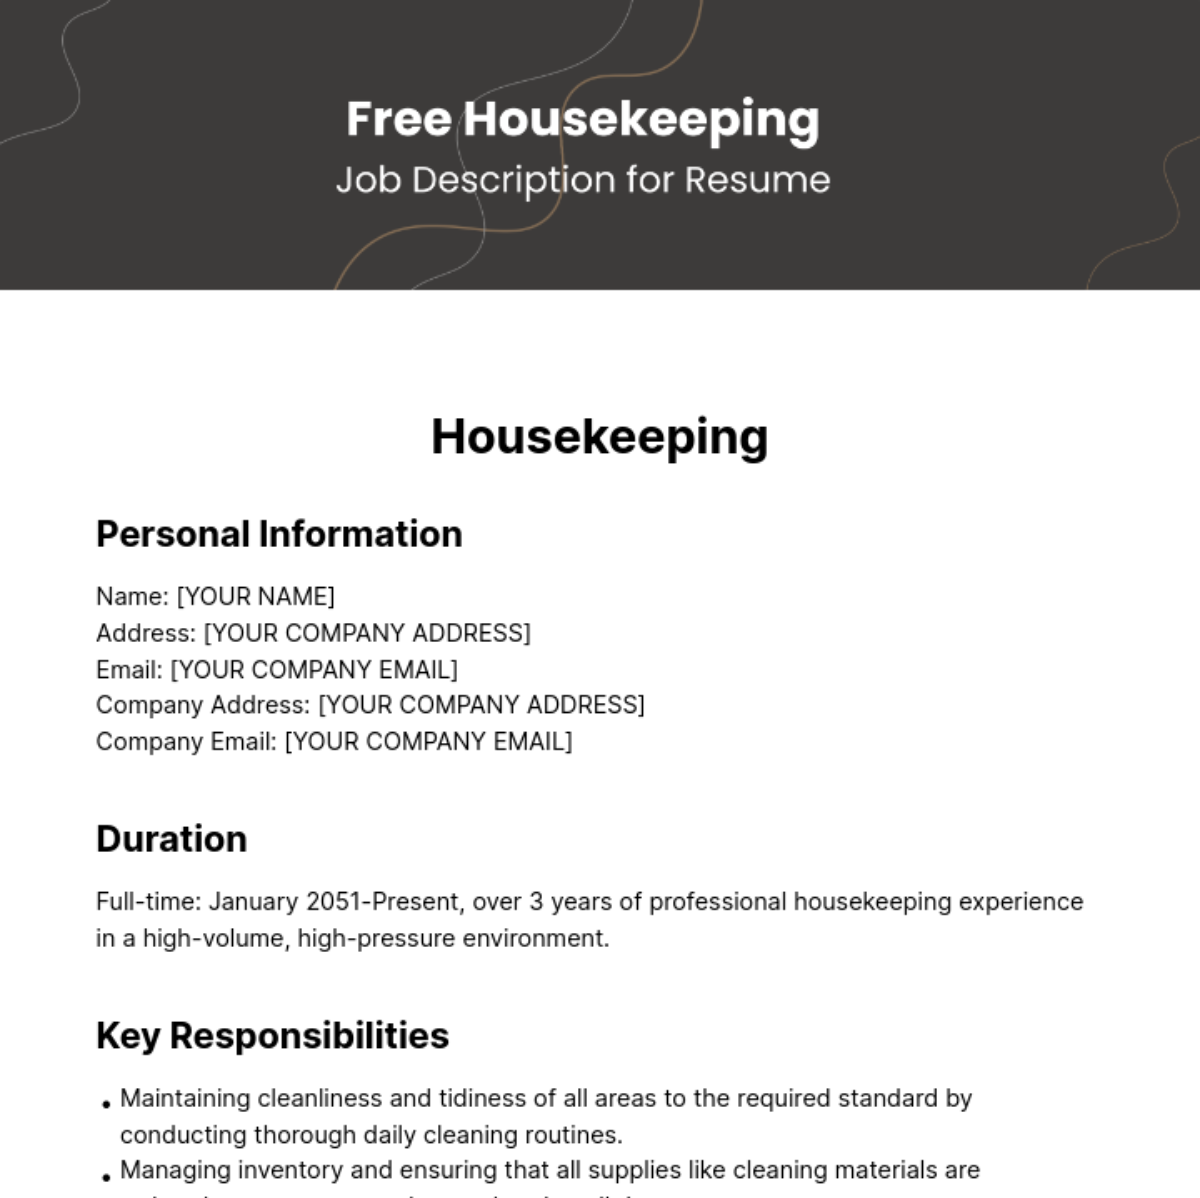 Housekeeping Job Description for Resume Template